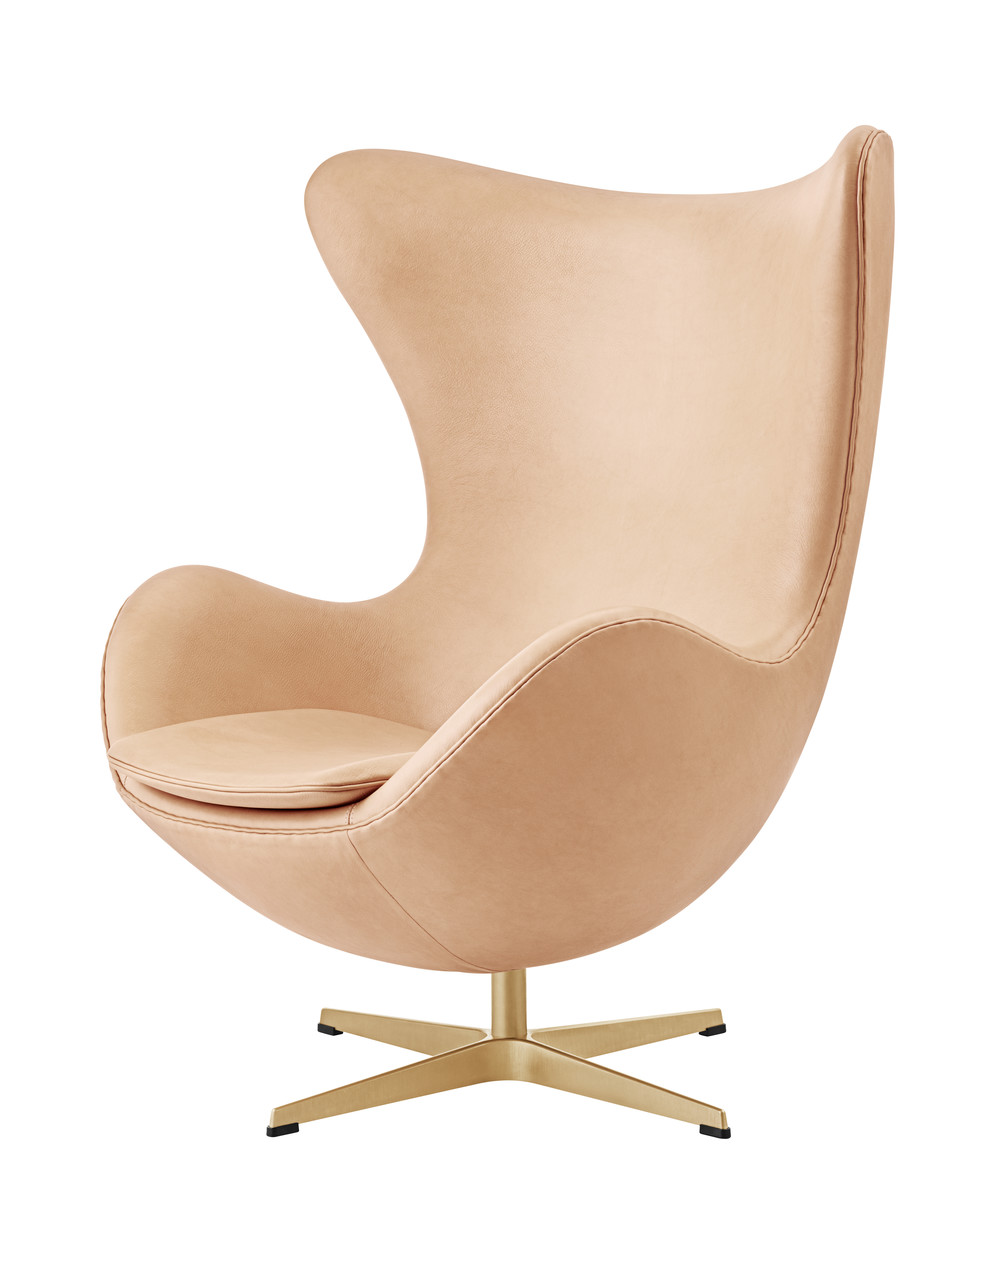 'Egg Chair', design Arne Jacobsen, Republic of Fritz Hansen